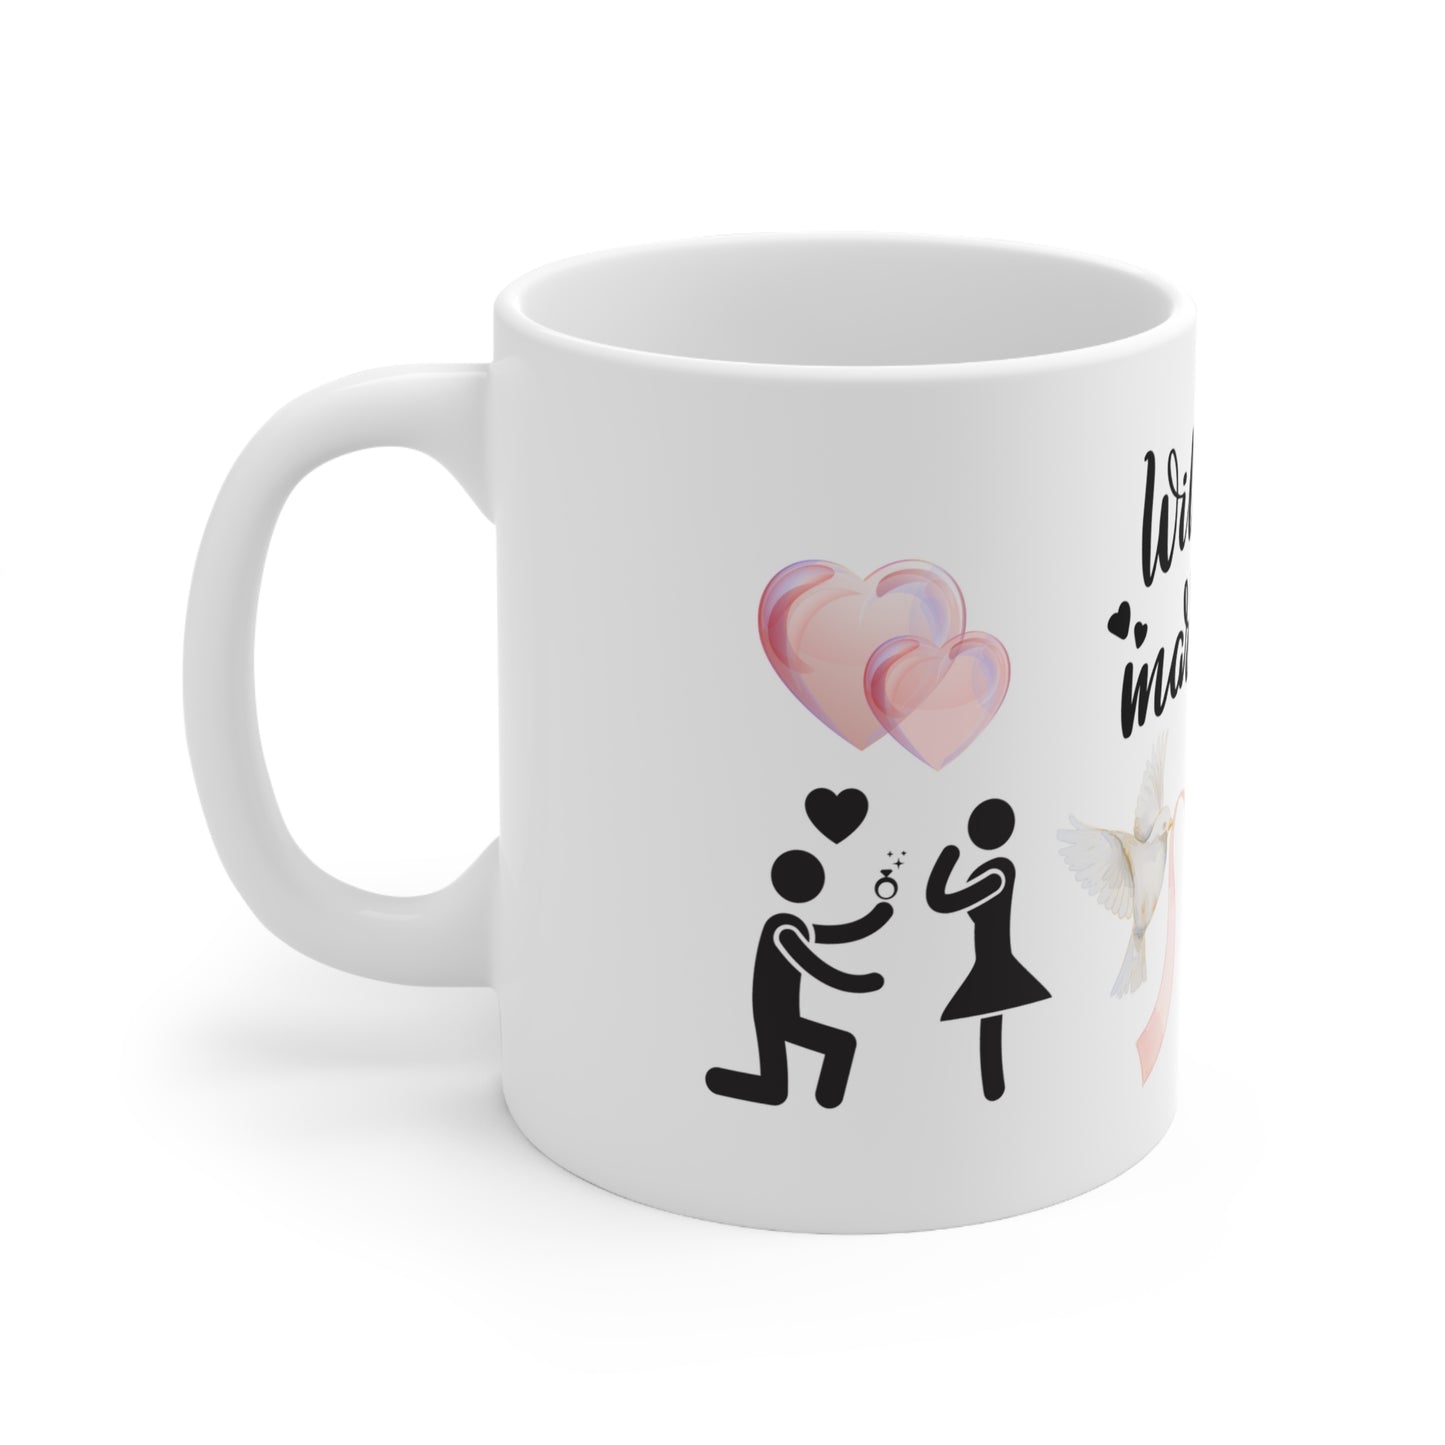 MARRIAGE PROPOSAL MUG - Will You Marry Me? Mug - White- Mugscity - Free Shipping